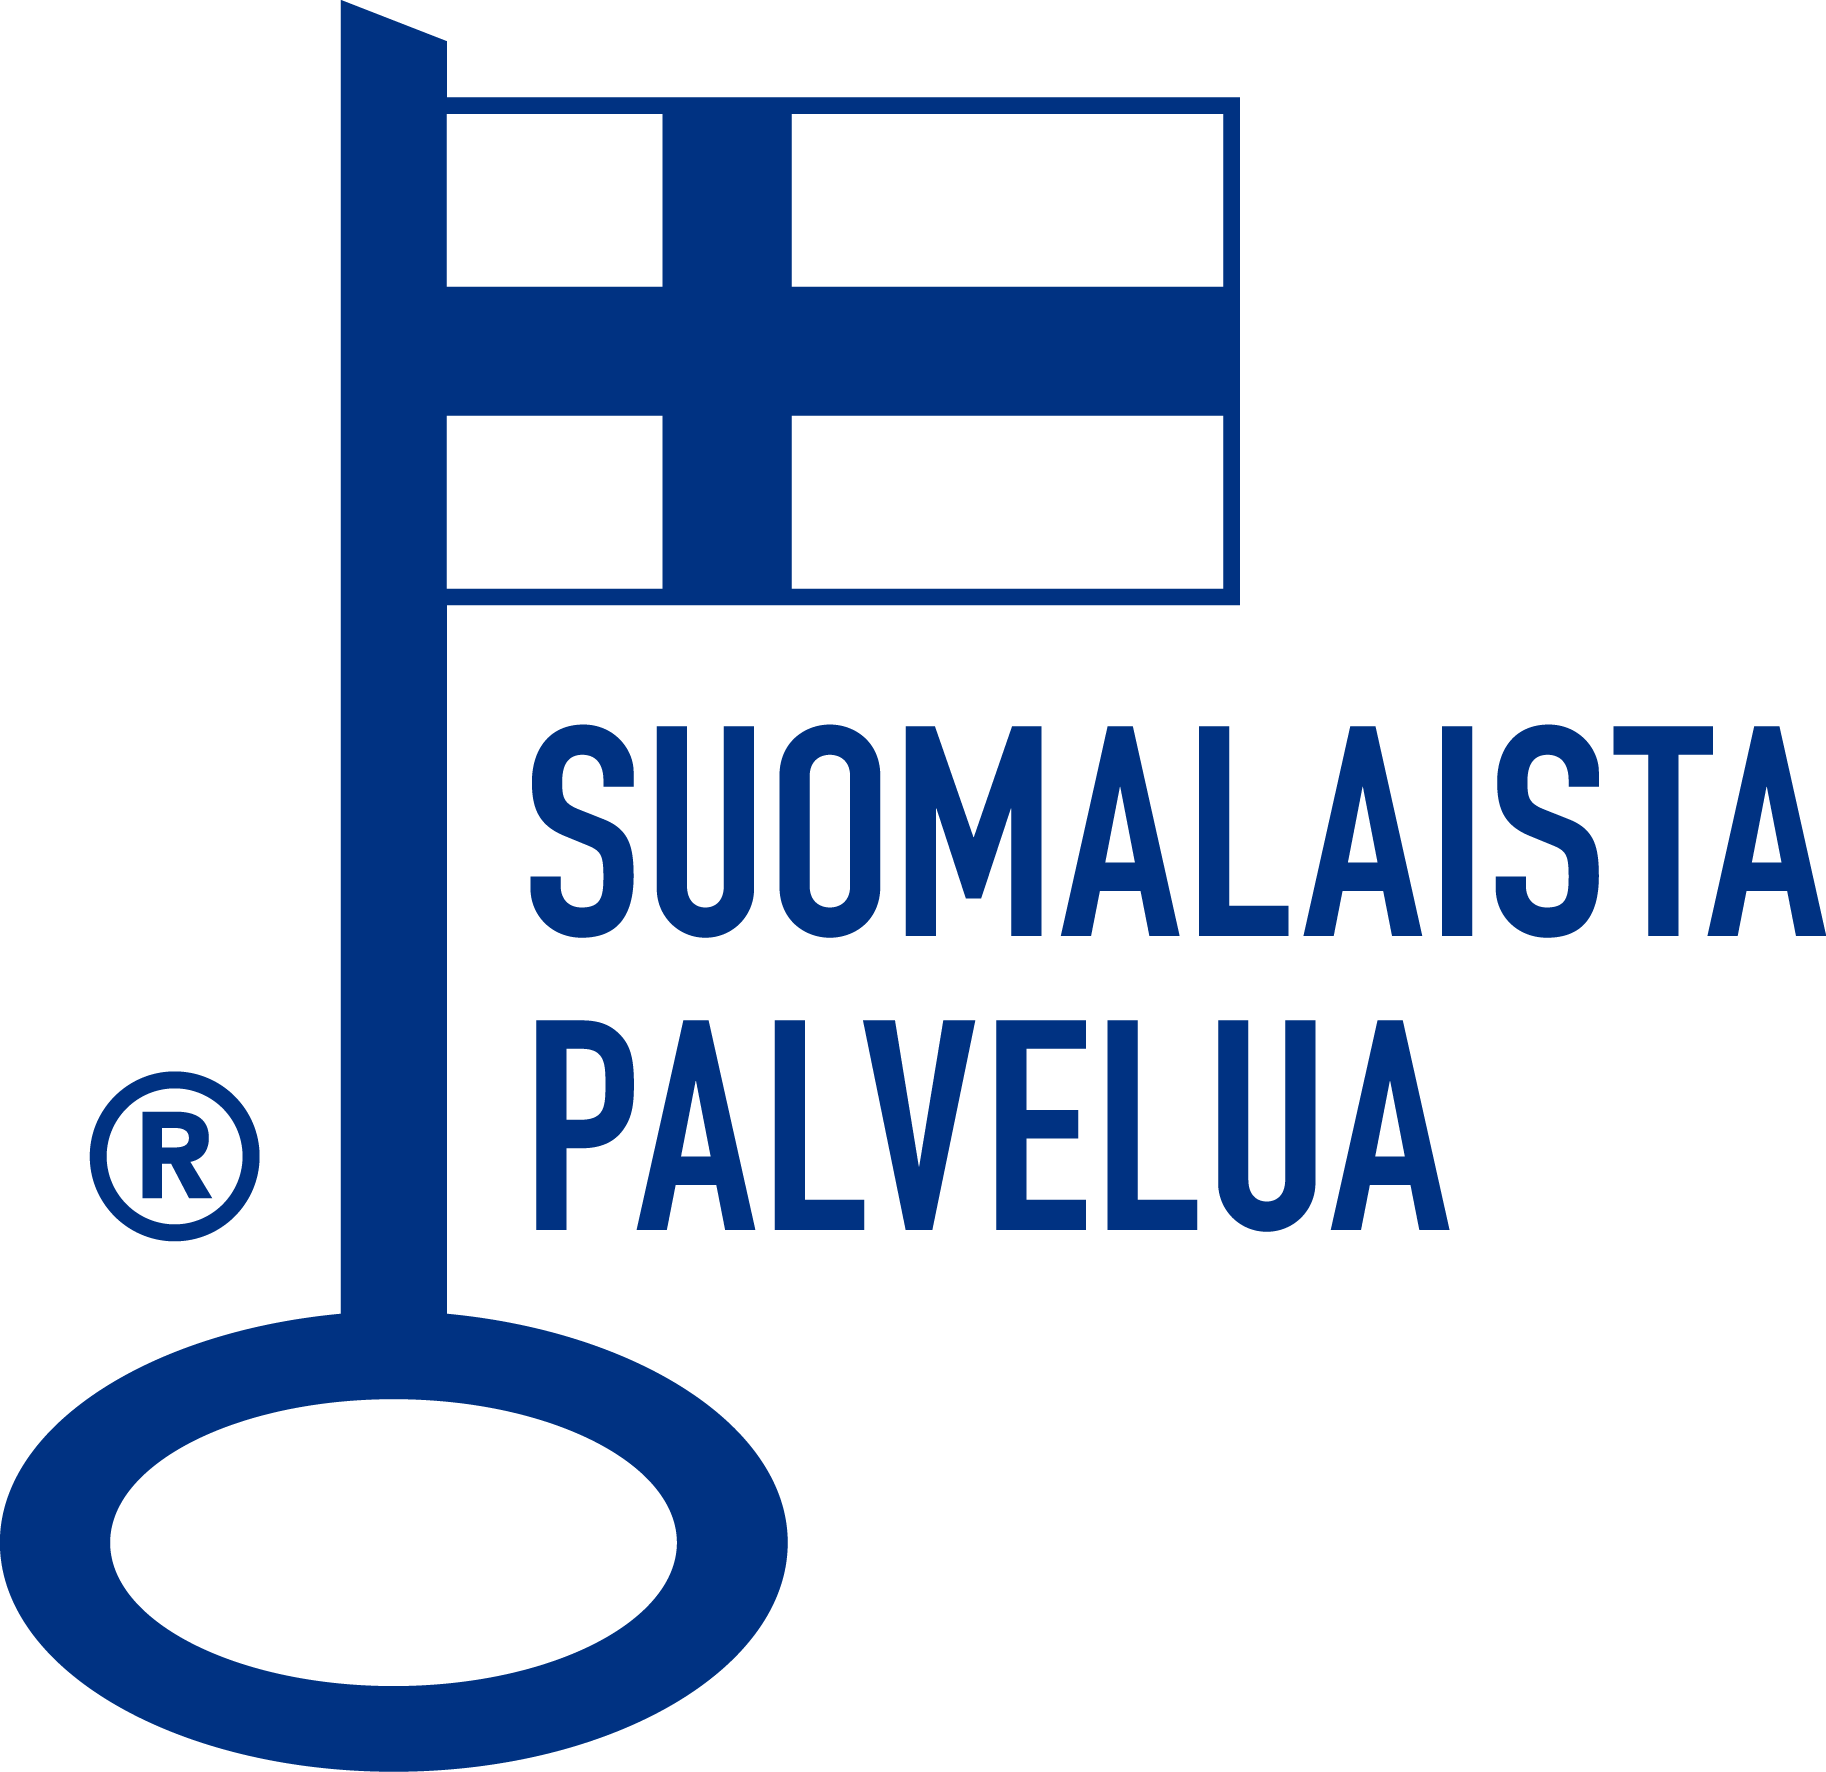 Suomalaista palvelus